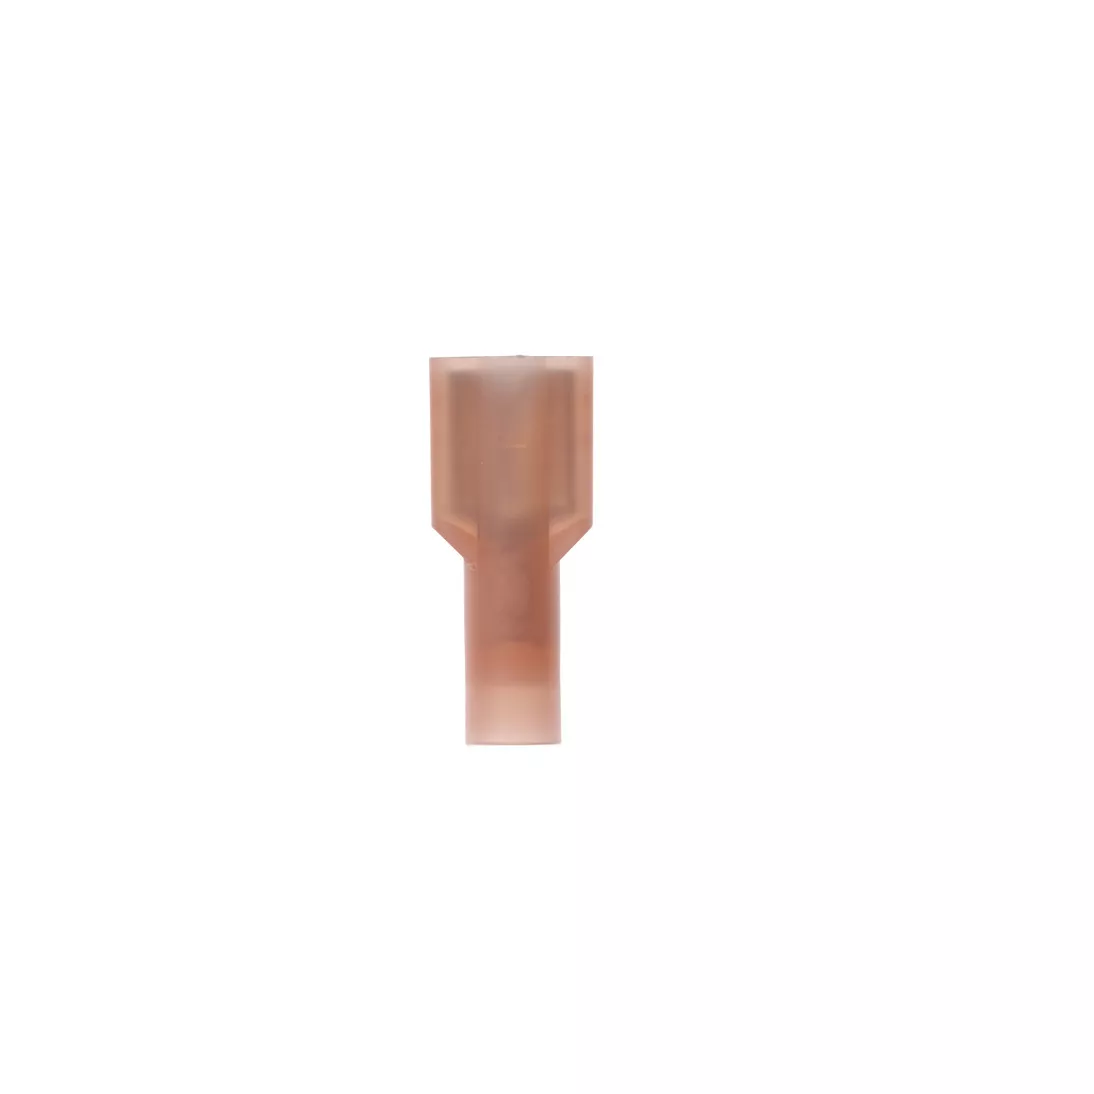 3M™ Scotchlok™ Female Disconnect, Nylon Fully Insulated Butted Seam
w/Interlocking Barrel MNI18-250DFIK, 22-18 AWG